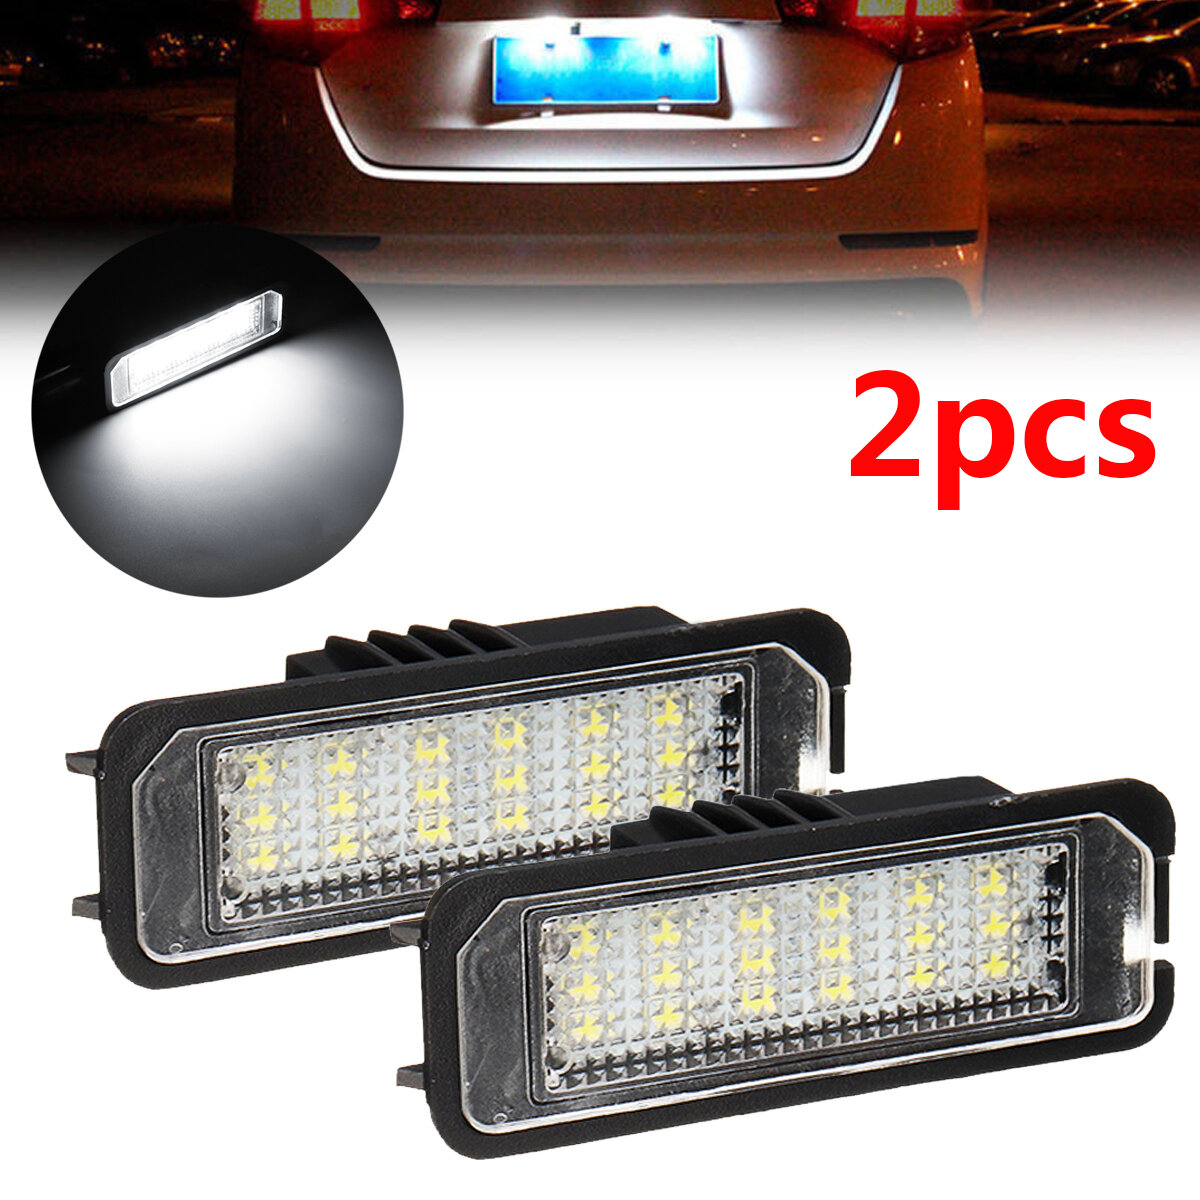 2PCS 18 LED License Number Plate Car Lights For VW Golf MK4 MK5 MK6Passat Lupo Polo 9N